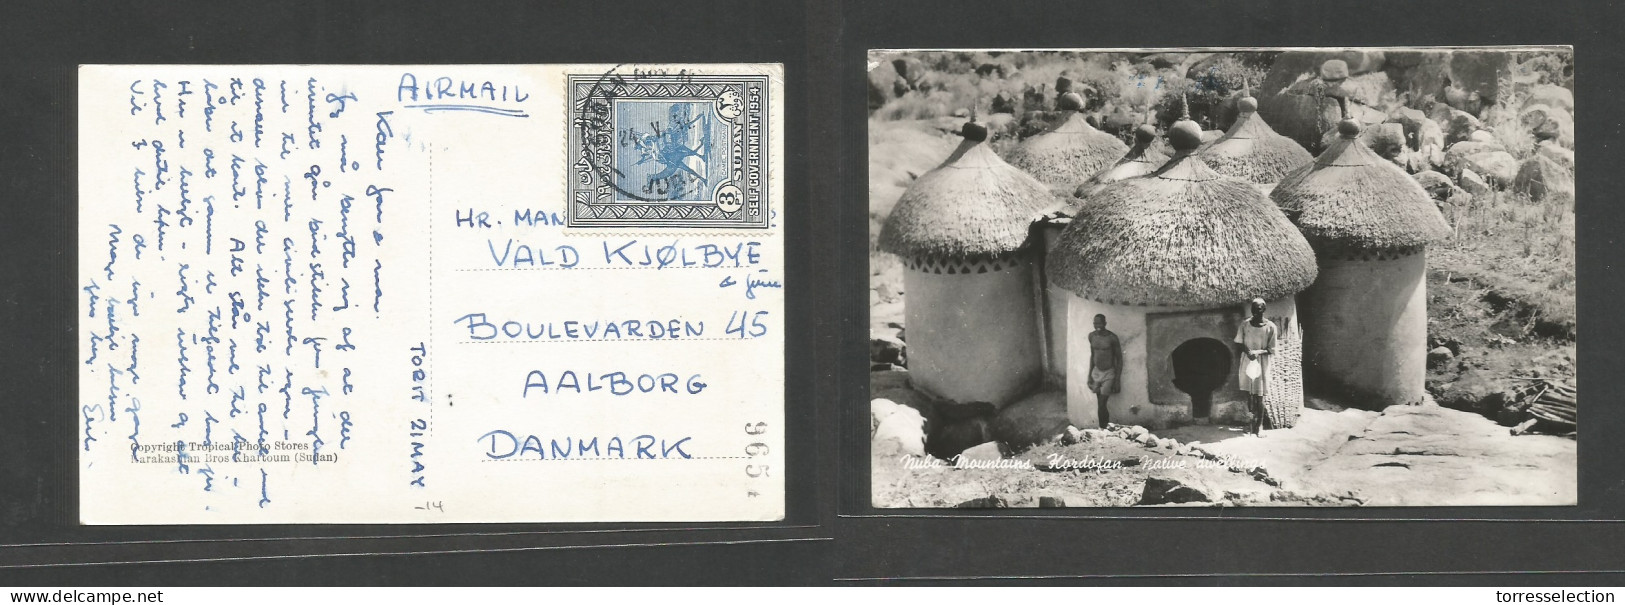 SUDAN. 1954 (21 May) Juba - Denmark, Aalborg. Air Single Fkd Photo Ppc. Fine. - Soudan (1954-...)